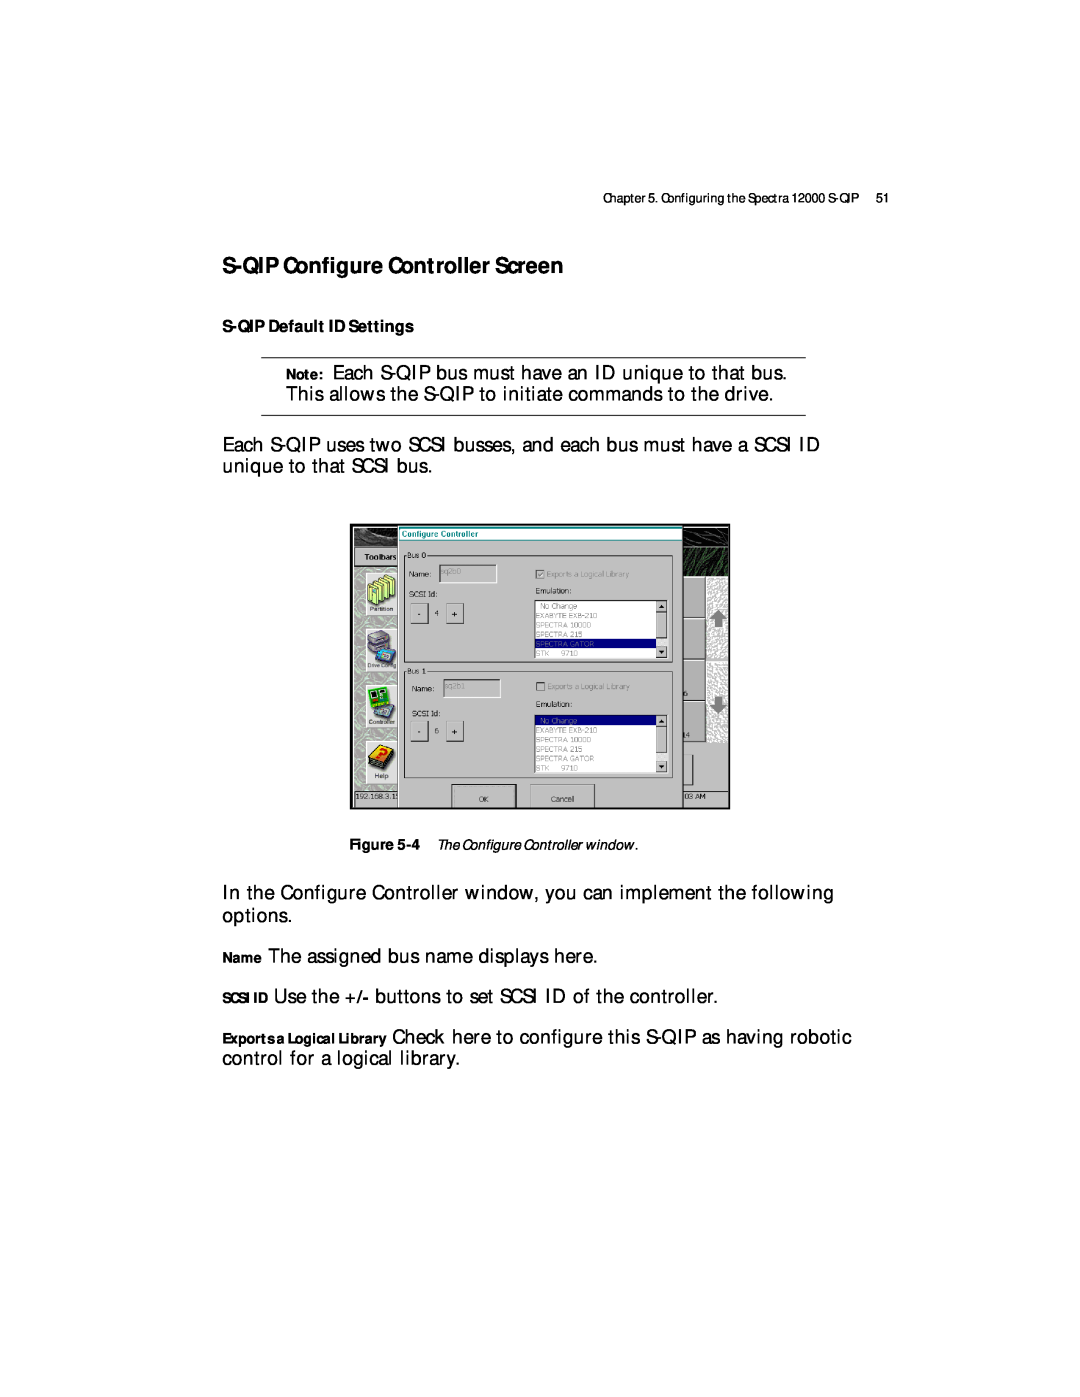 Spectra Logic Spectra 12000 manual S-QIP Configure Controller Screen, S-QIP Default ID Settings 